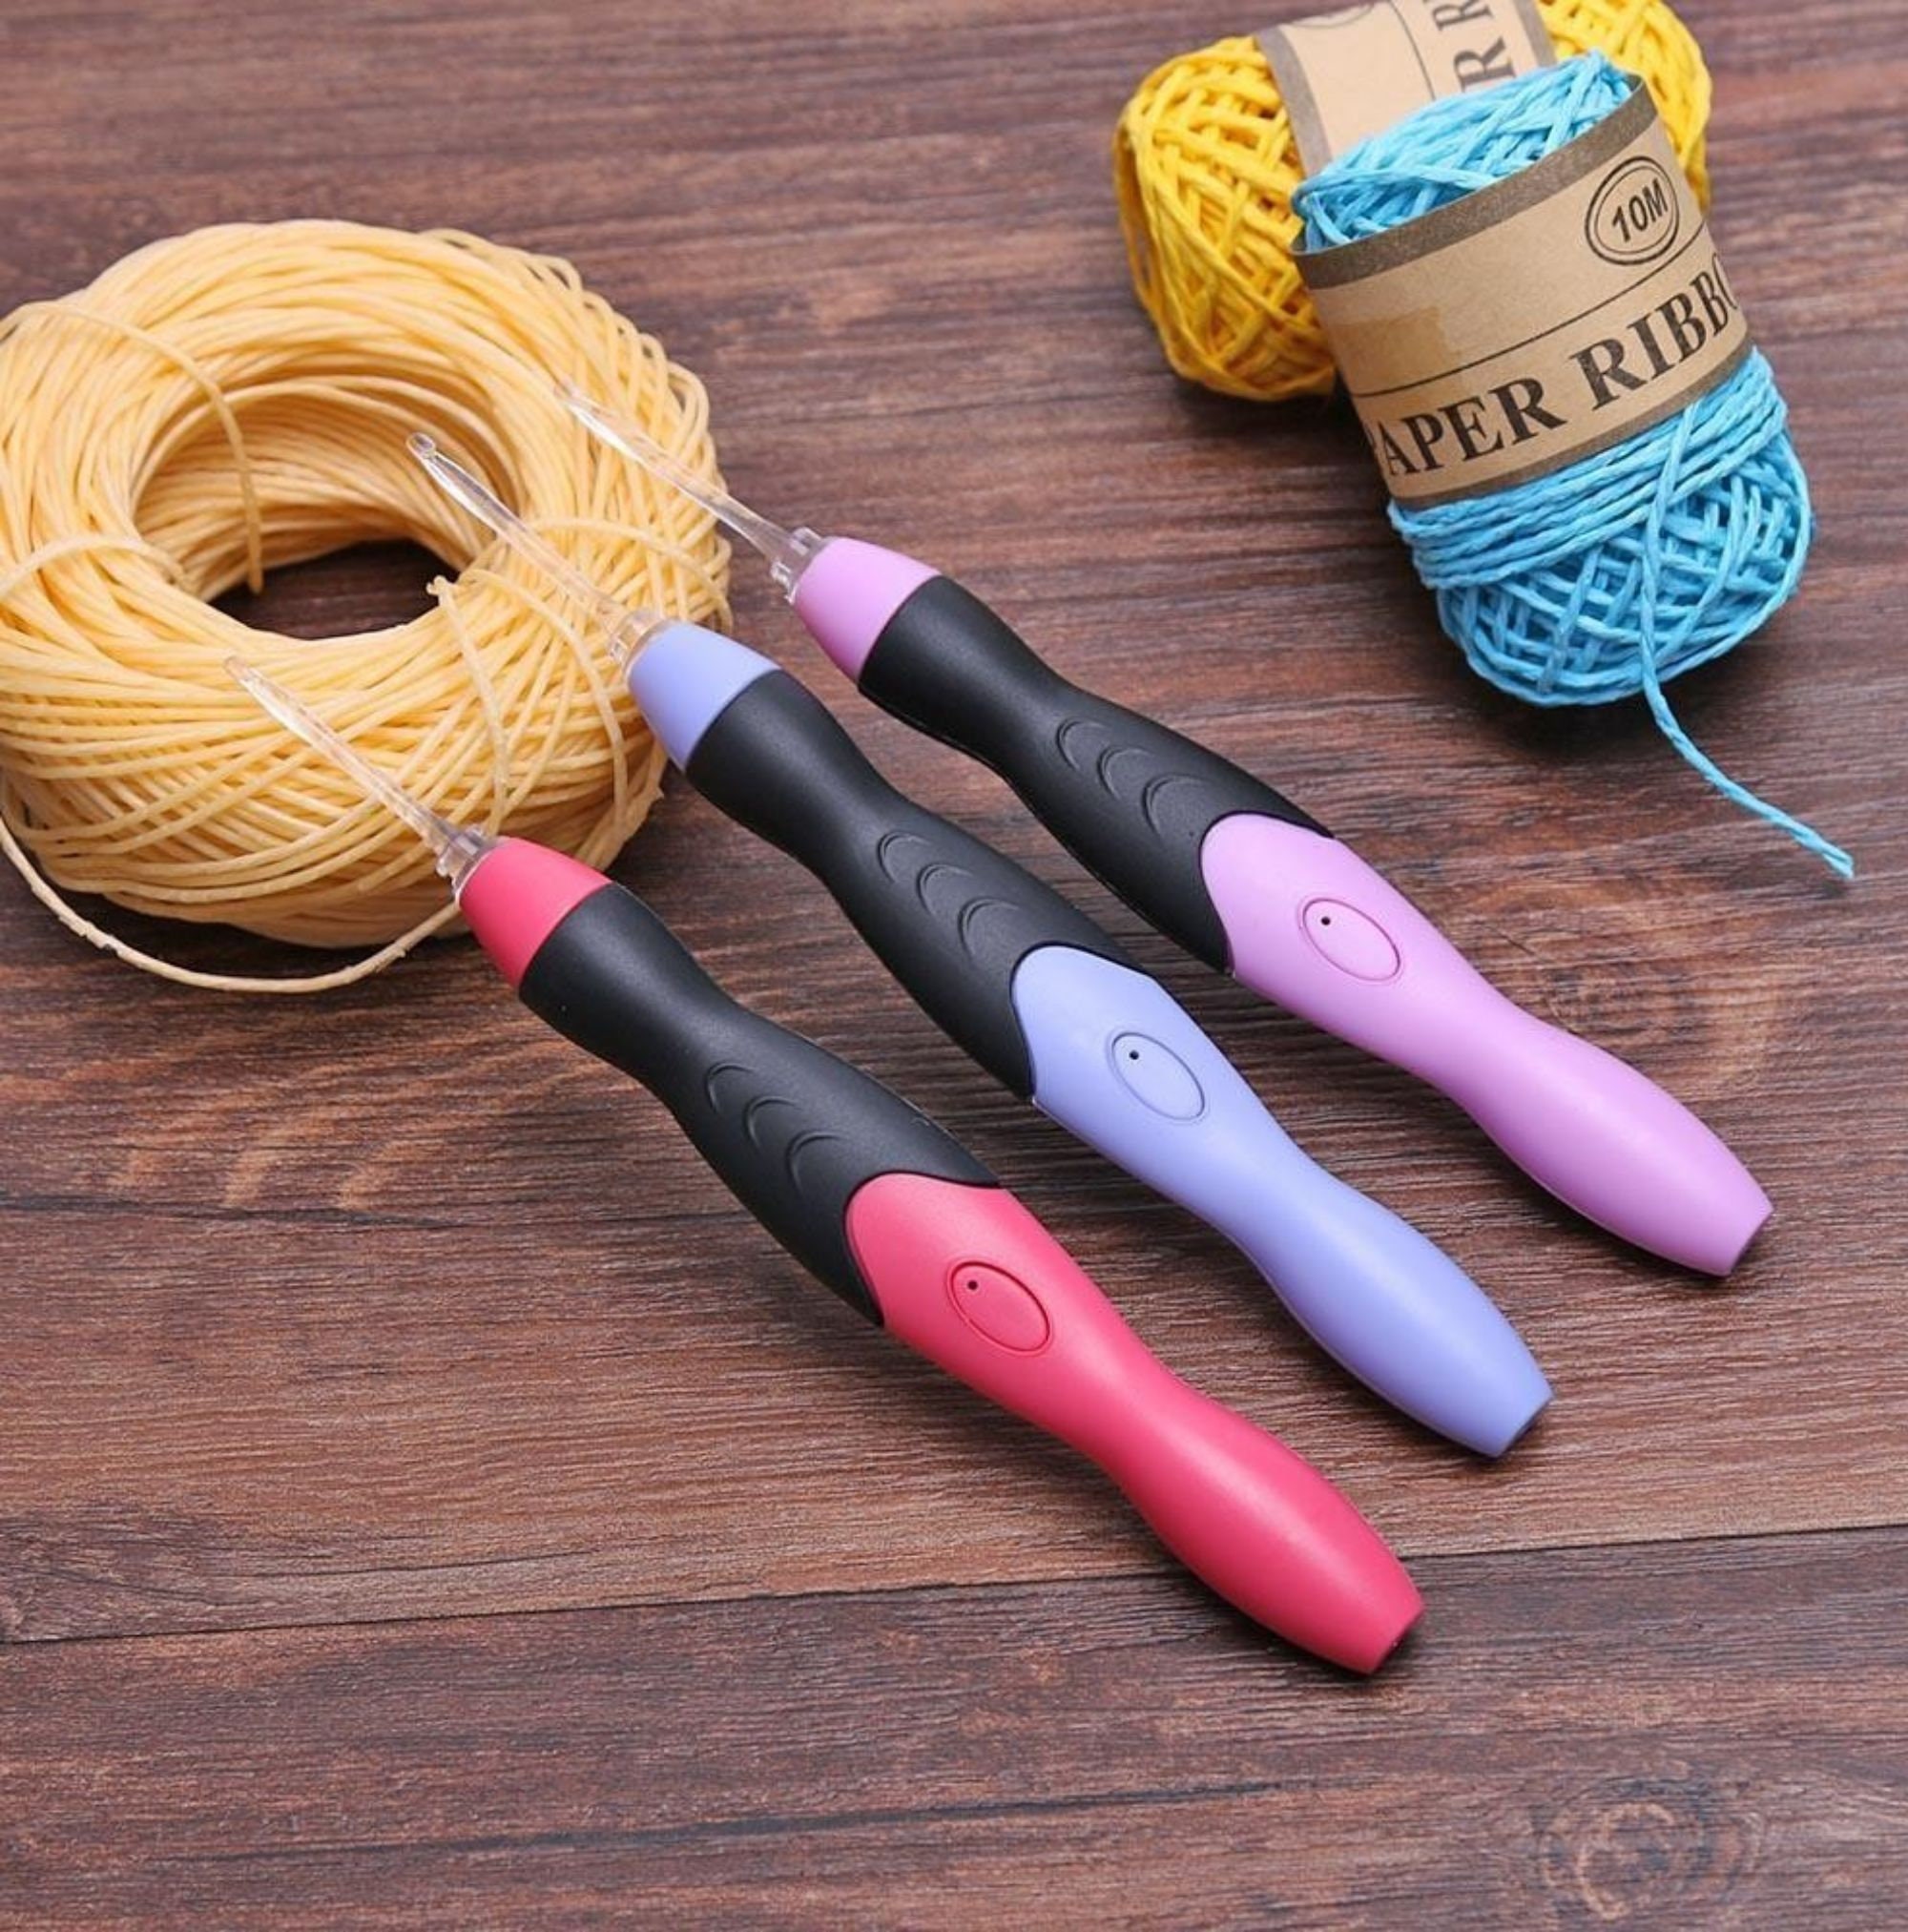 Crochet Hooks Light up Crochet Hook Set Ergonomic Grip Handles 17 USB  Rechargeable Lighted Interchangeable Hook Sizes 2.5-14mm 